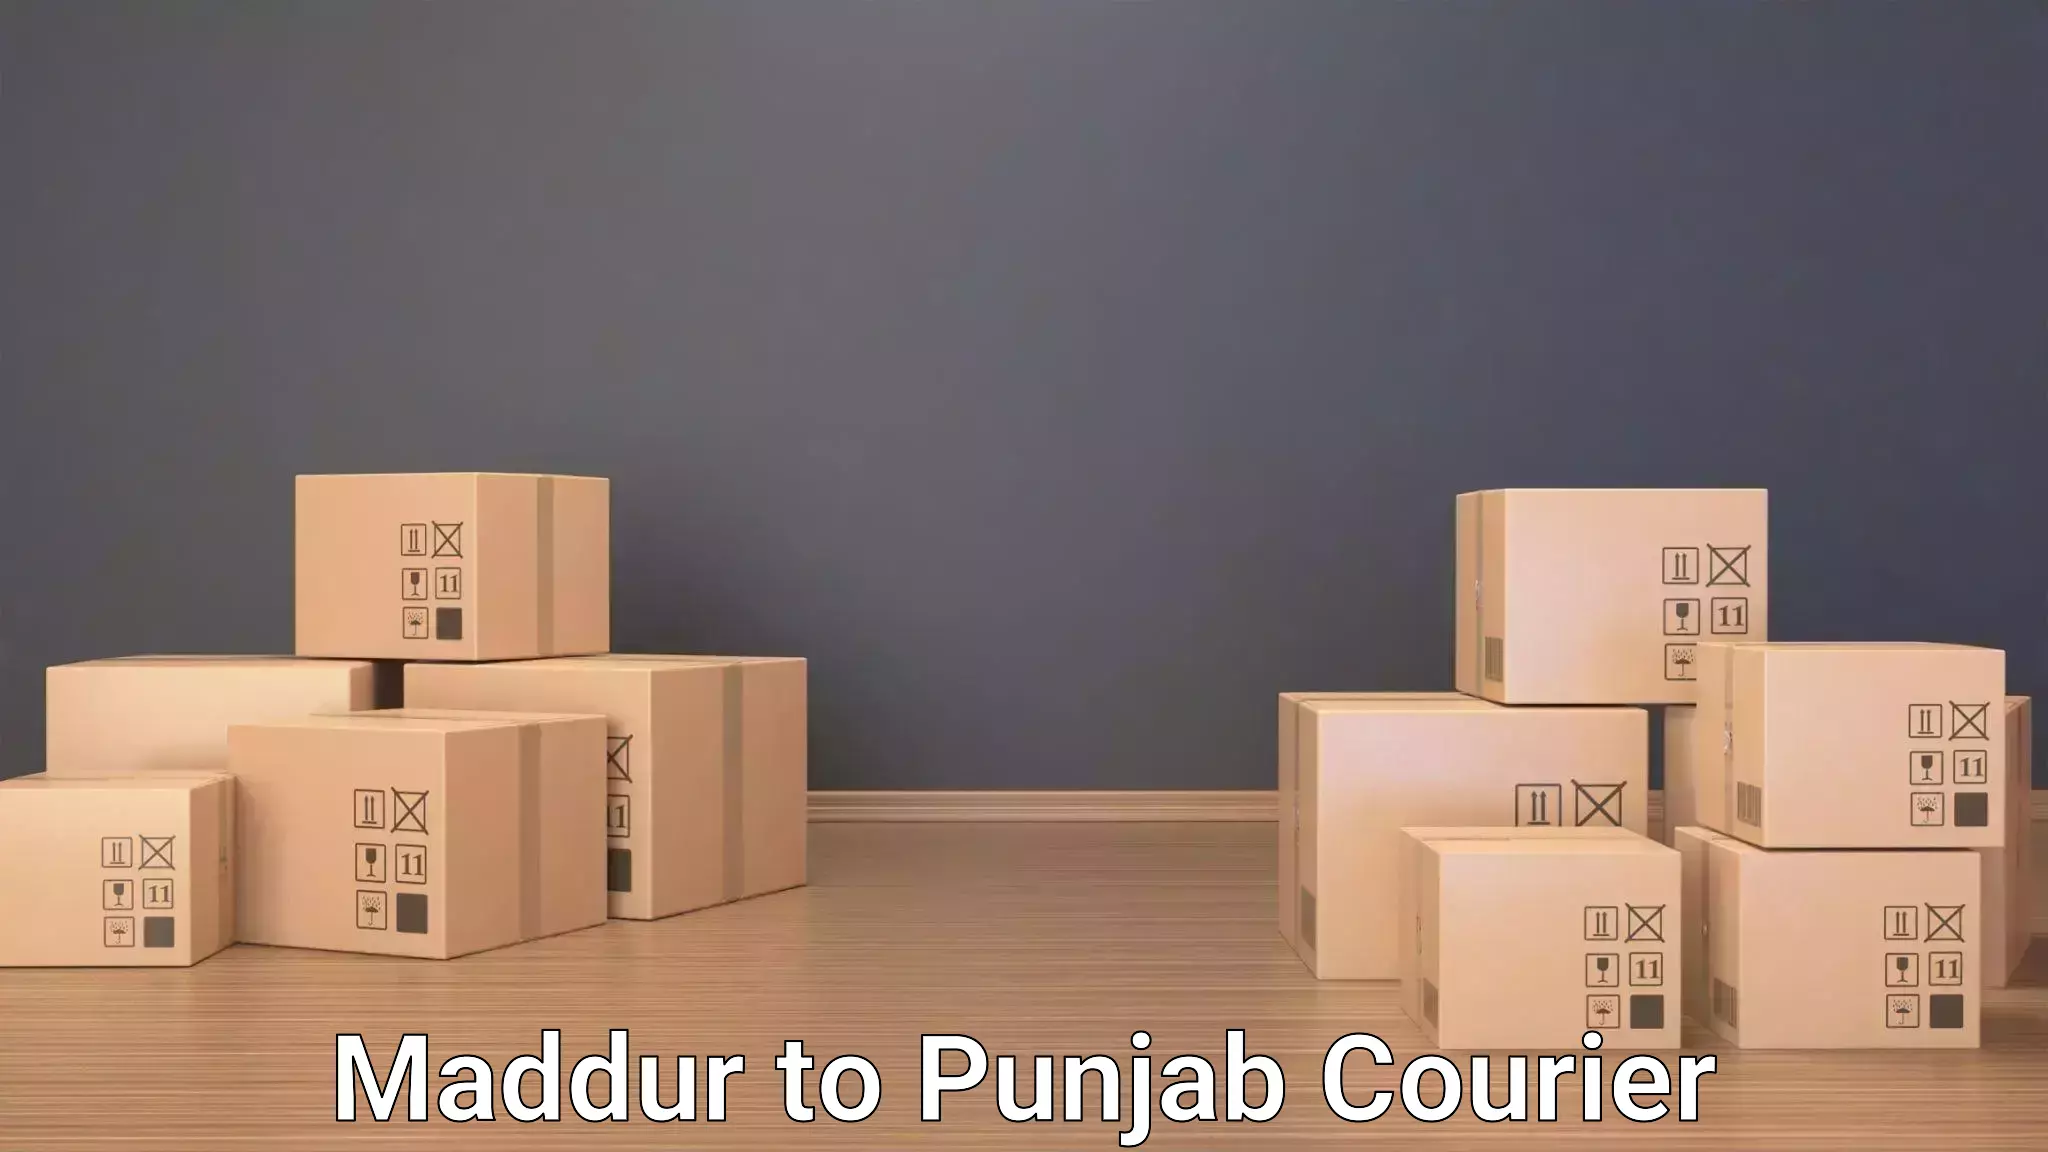 Luggage transport consultancy Maddur to Amritsar